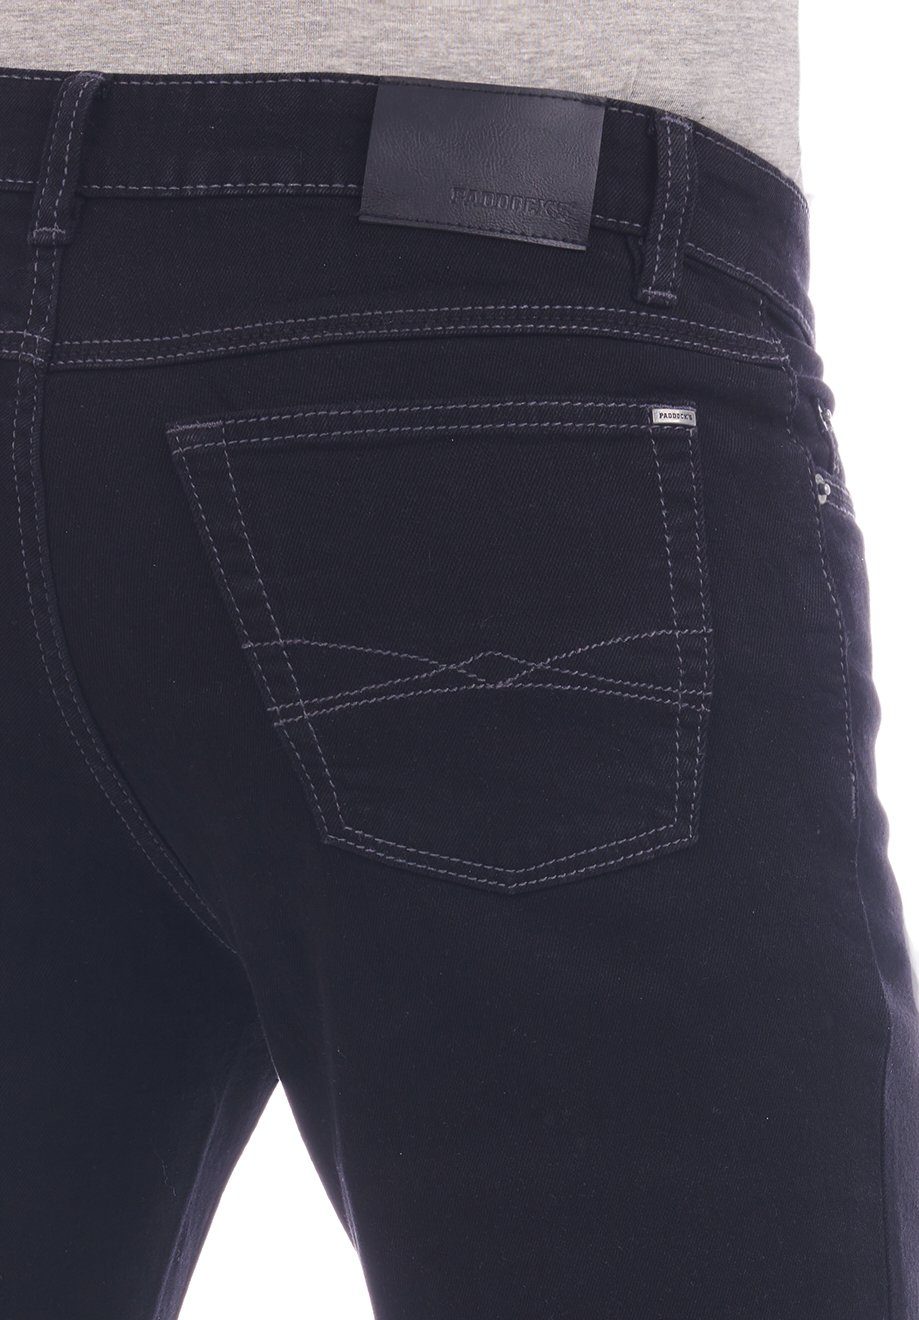 Paddock's Herren mit Stretch Pipe Slim-fit-Jeans (1219) Denim Jeanshose Hose Slim Ranger Black Fit Night